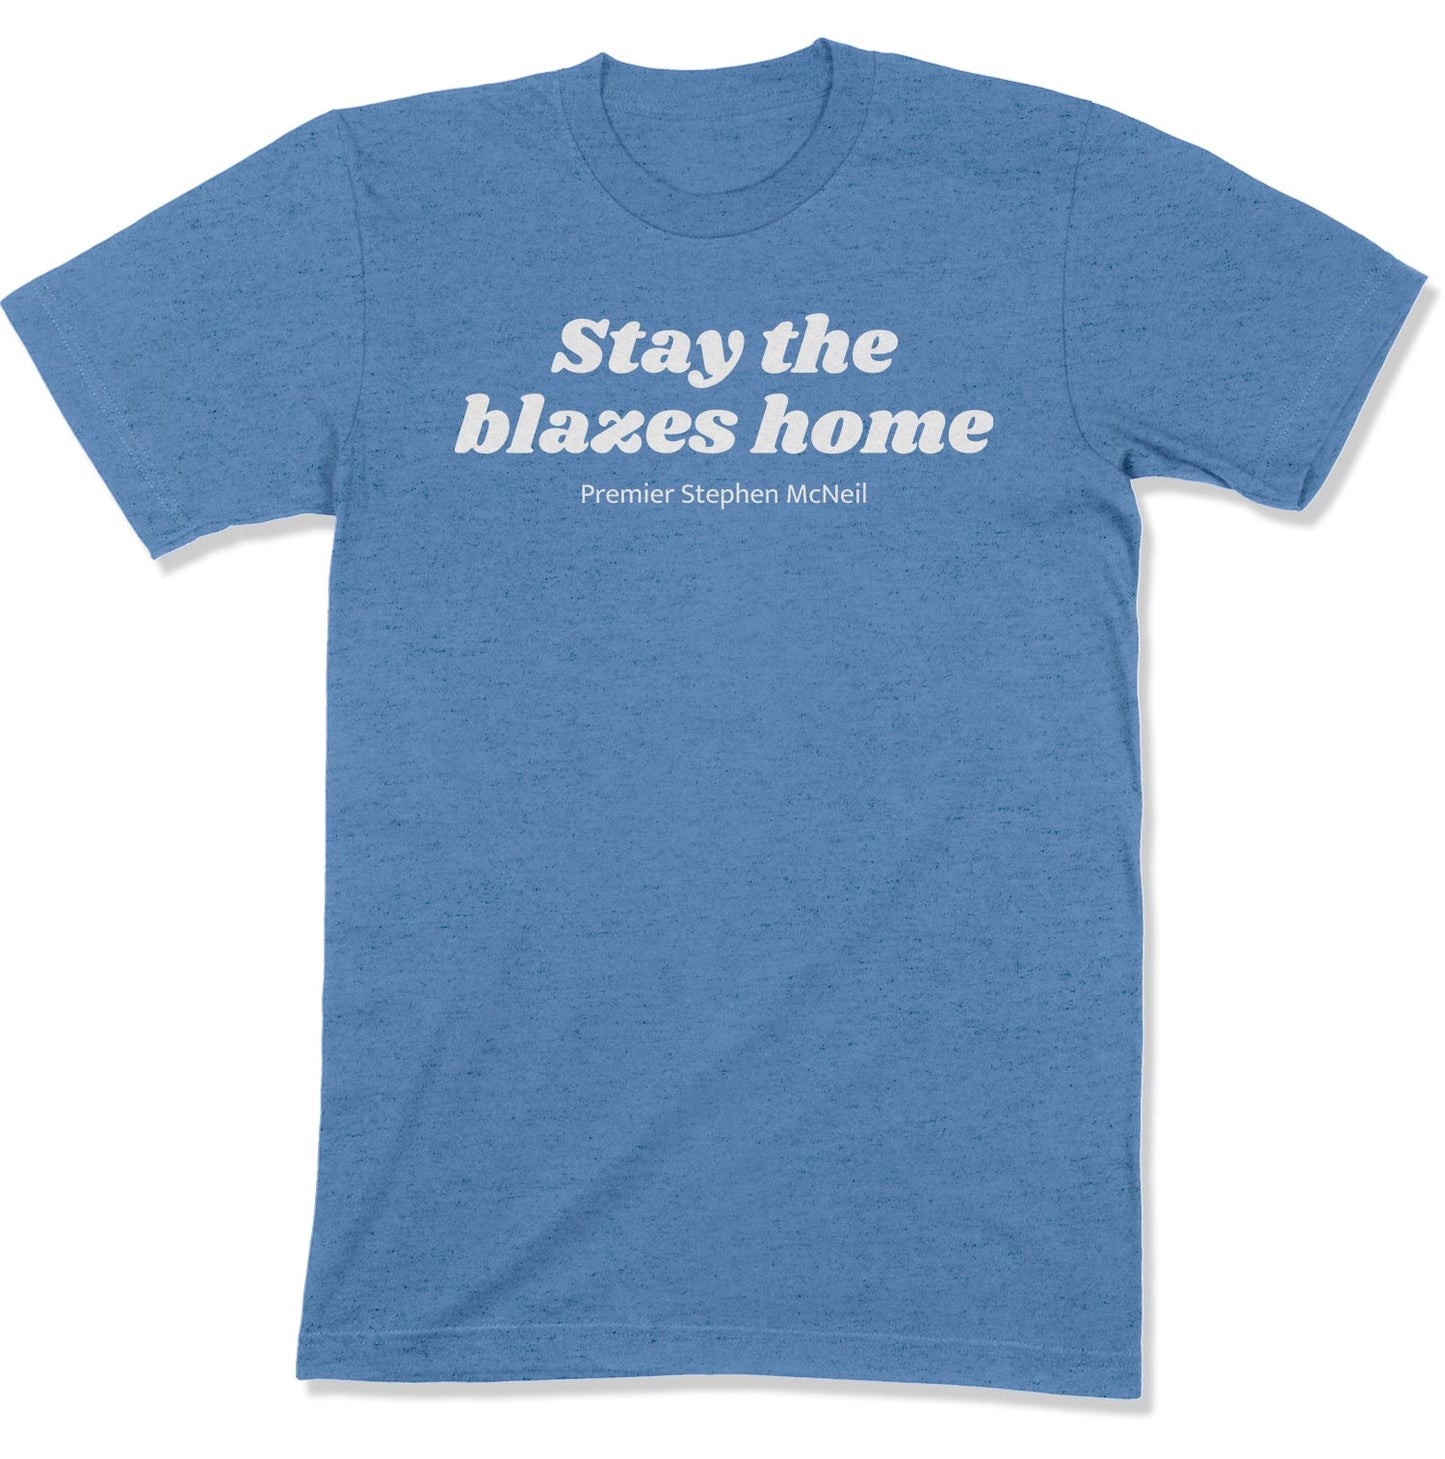 Stay the Blazes Home Unisex T-Shirt-East Coast AF Apparel